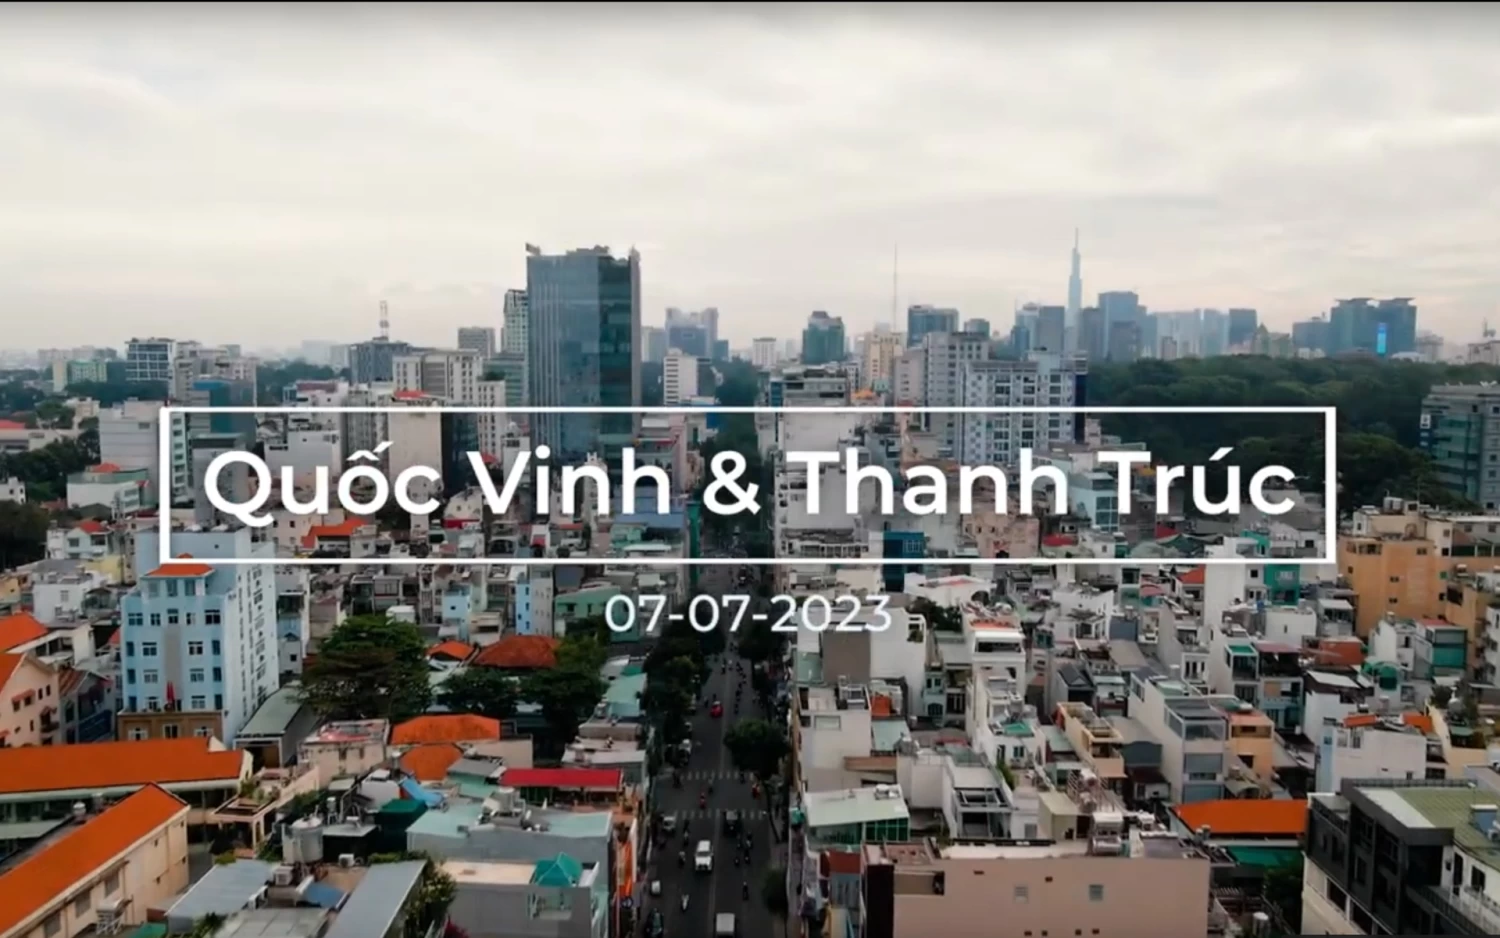 Wedding Day: Vinh & Truc